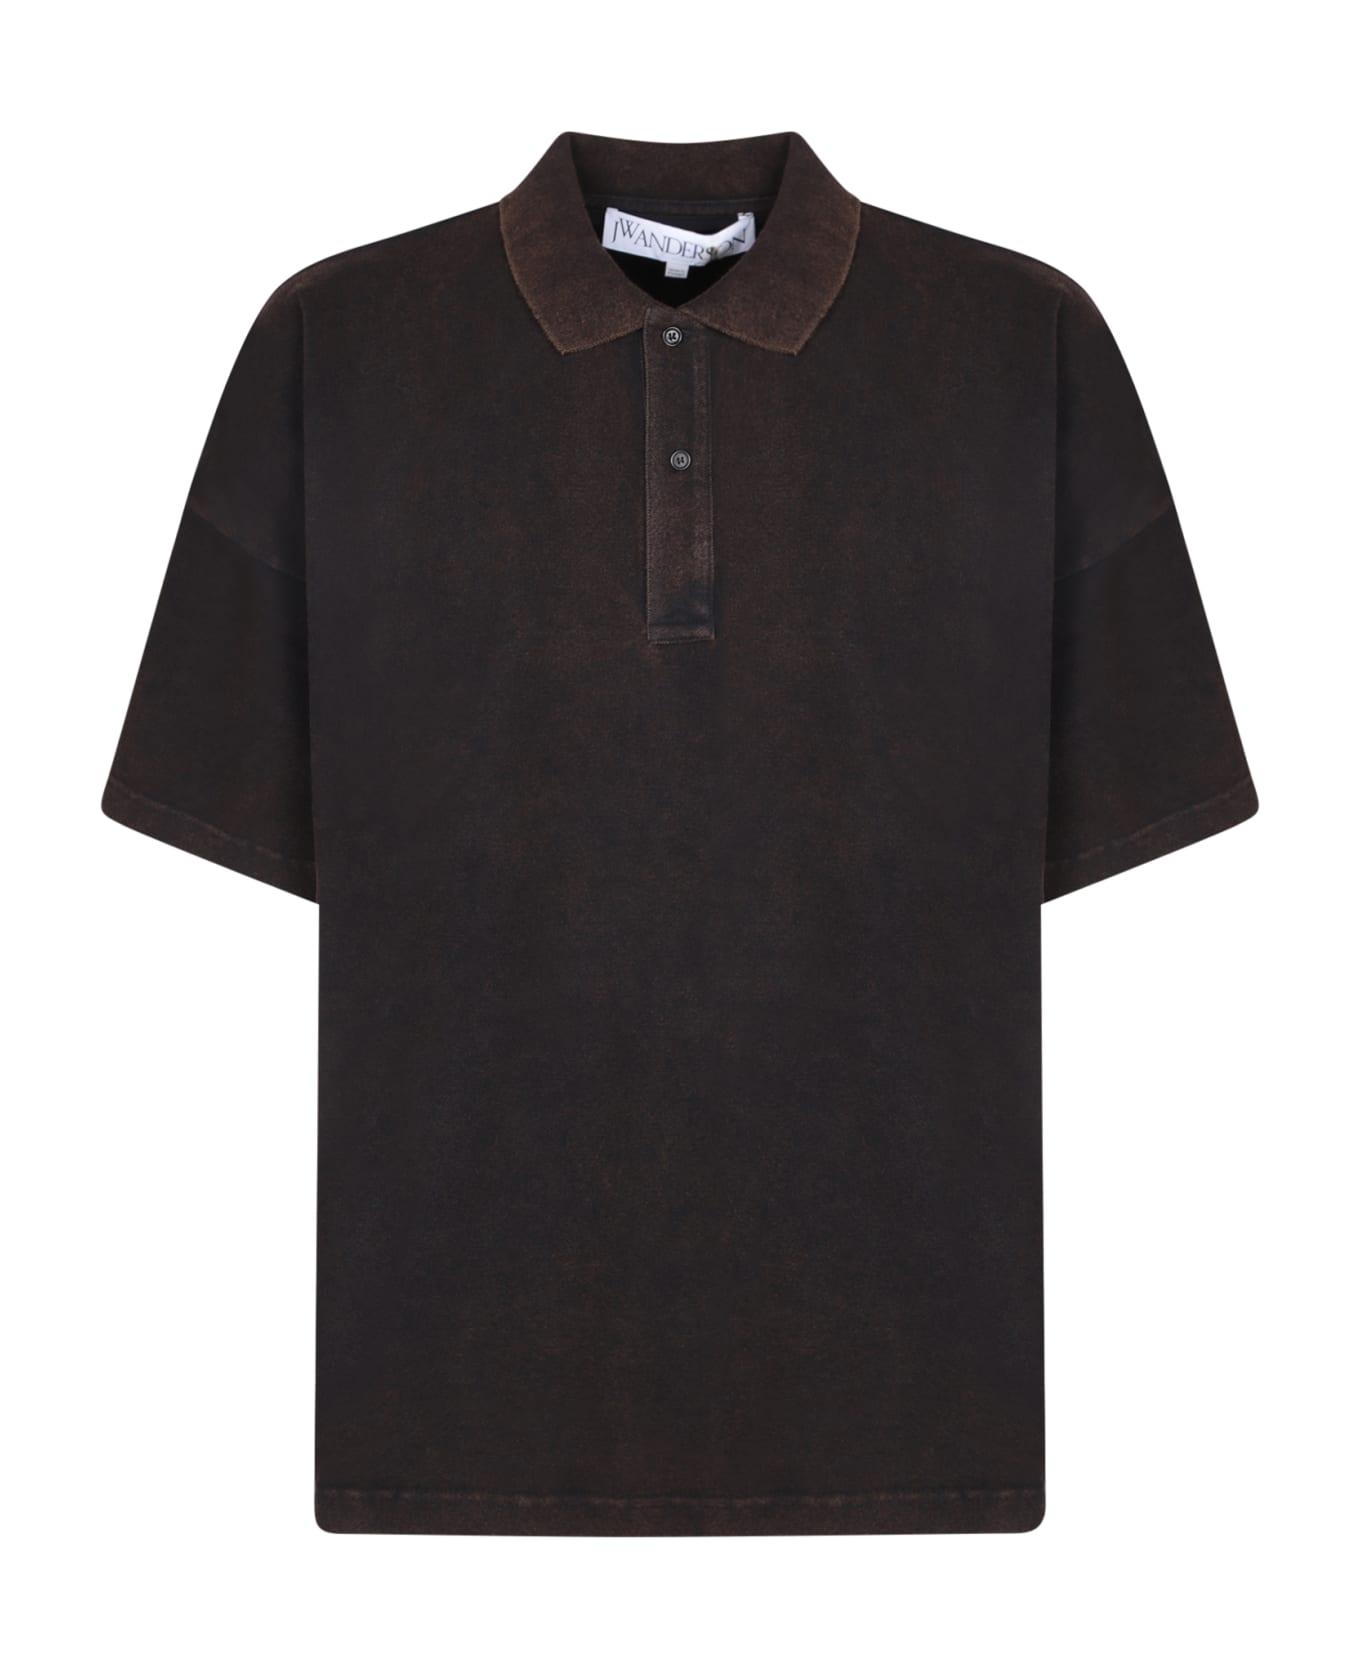 J.W. Anderson Anchor Brown Polo Shirt - Brown